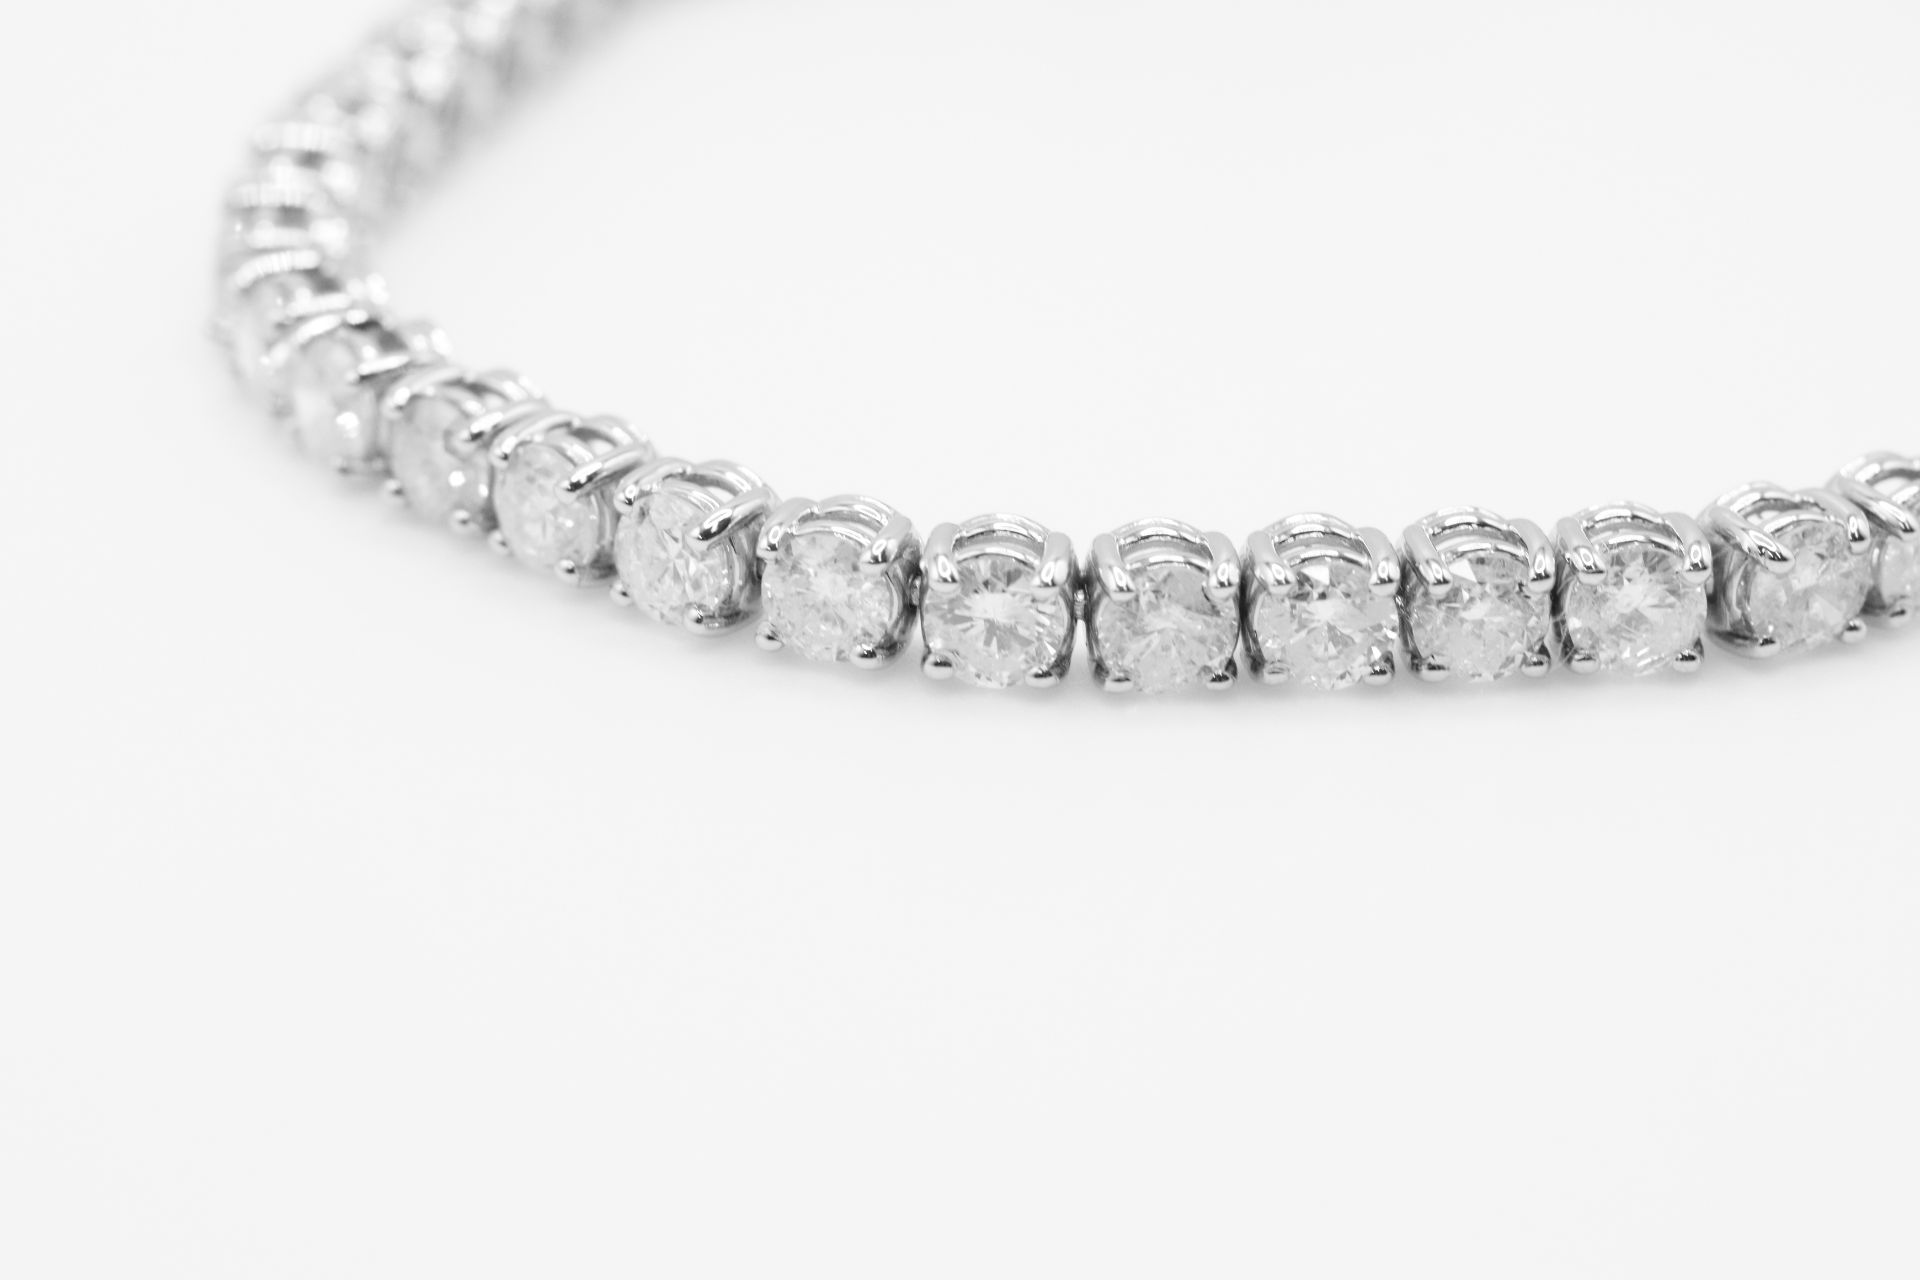 9.0 Carat 18ct White Gold Tennis Bracelet set with Round Brilliant Cut Natural Diamonds - Image 3 of 17